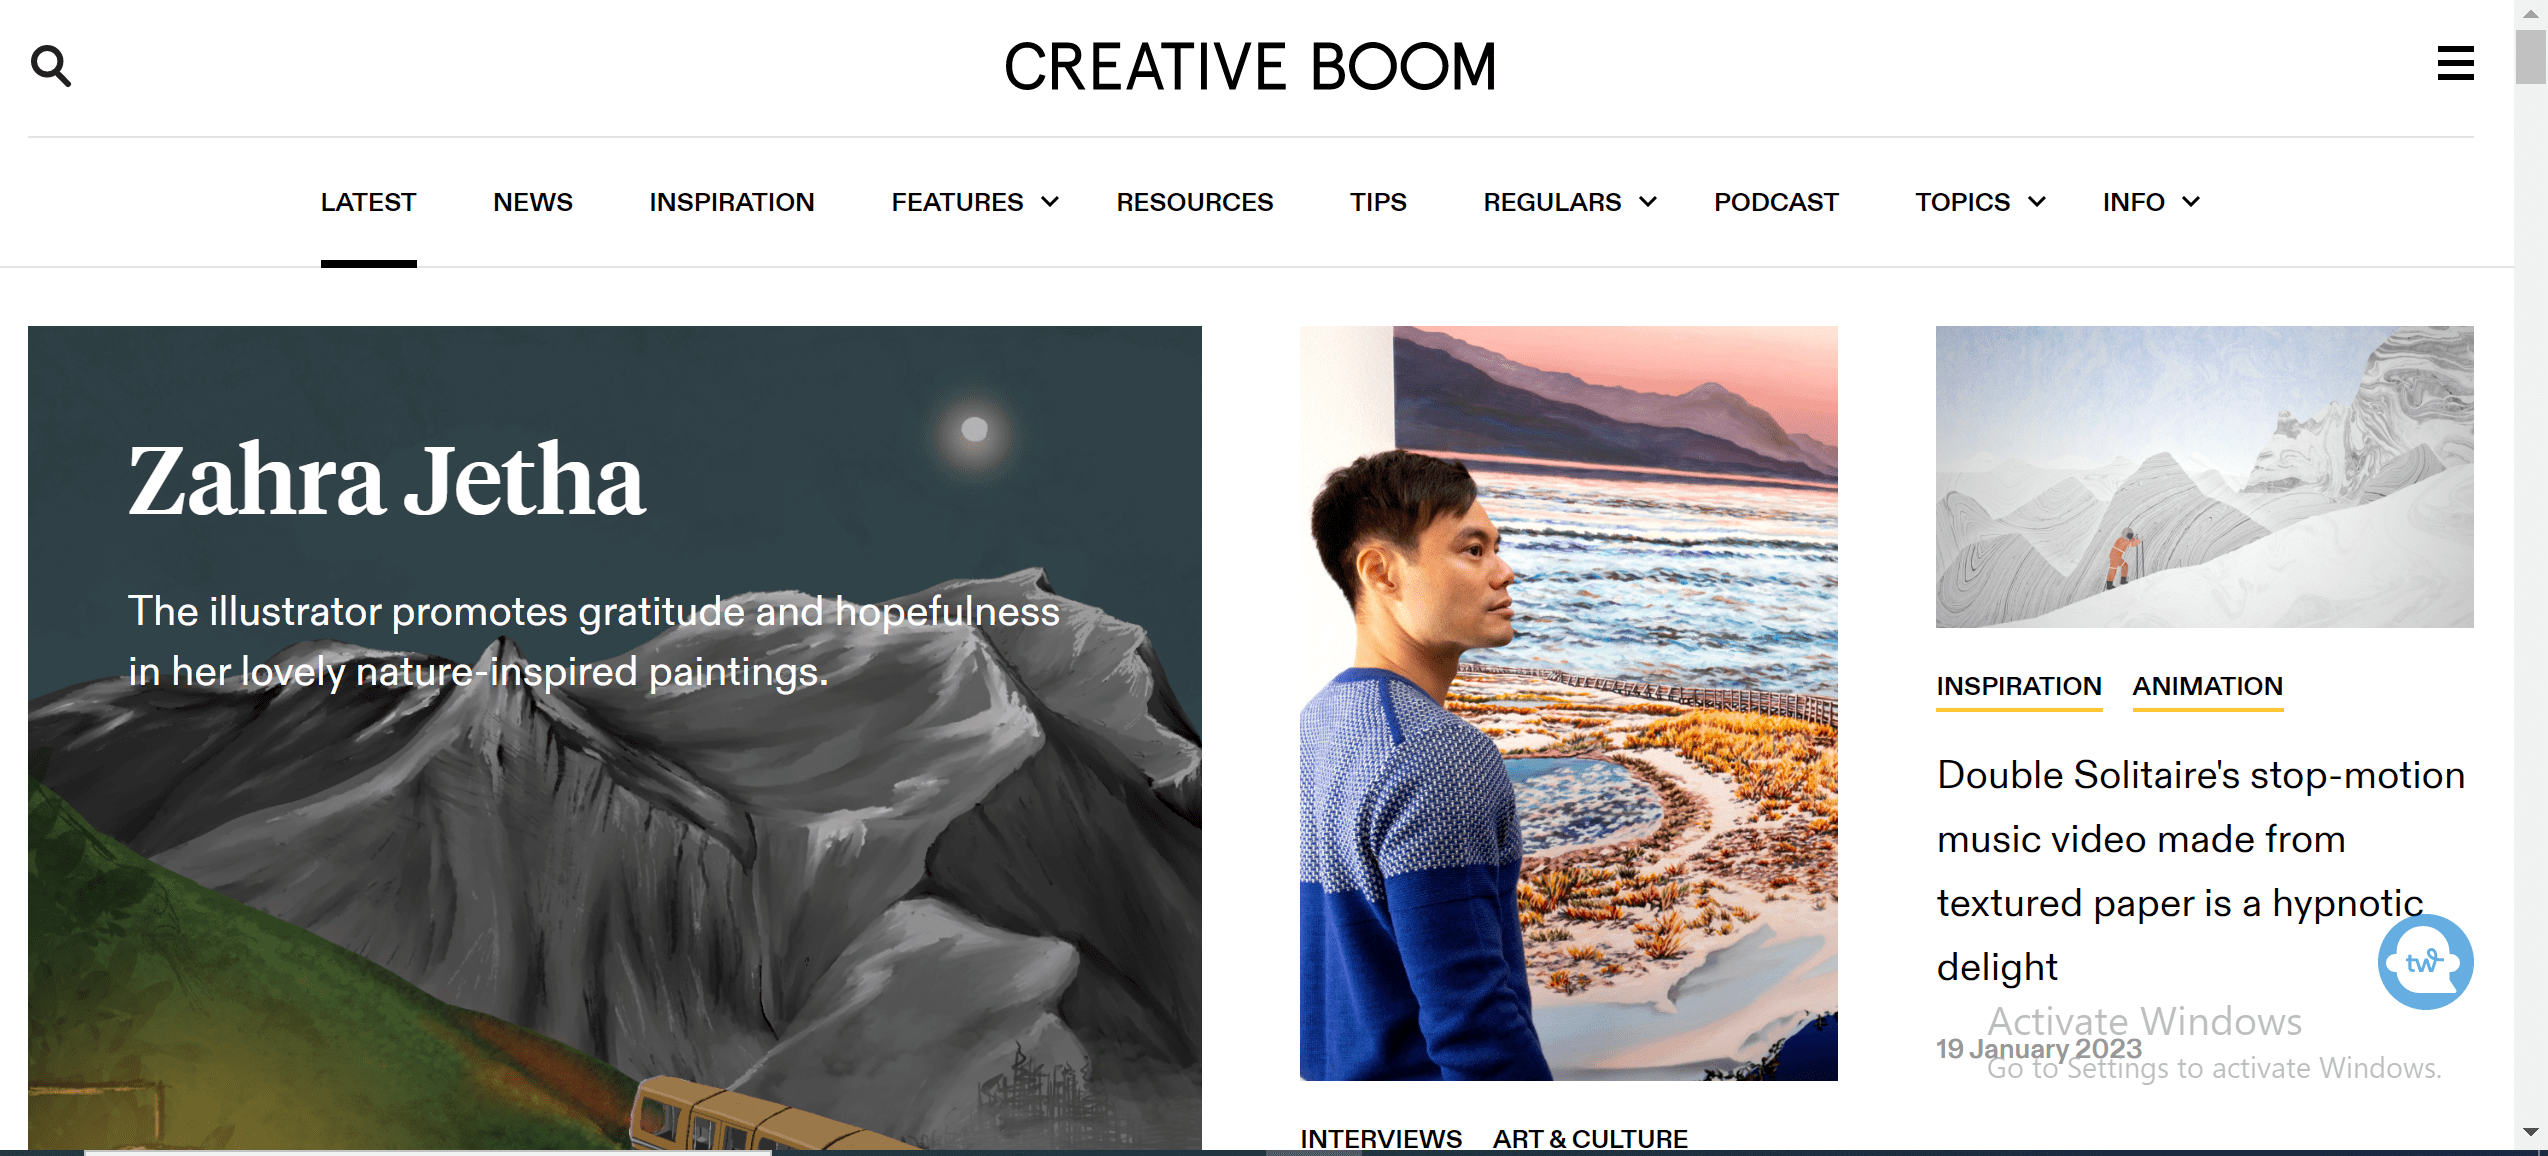 alt="CreativeBoom photography website homepage"